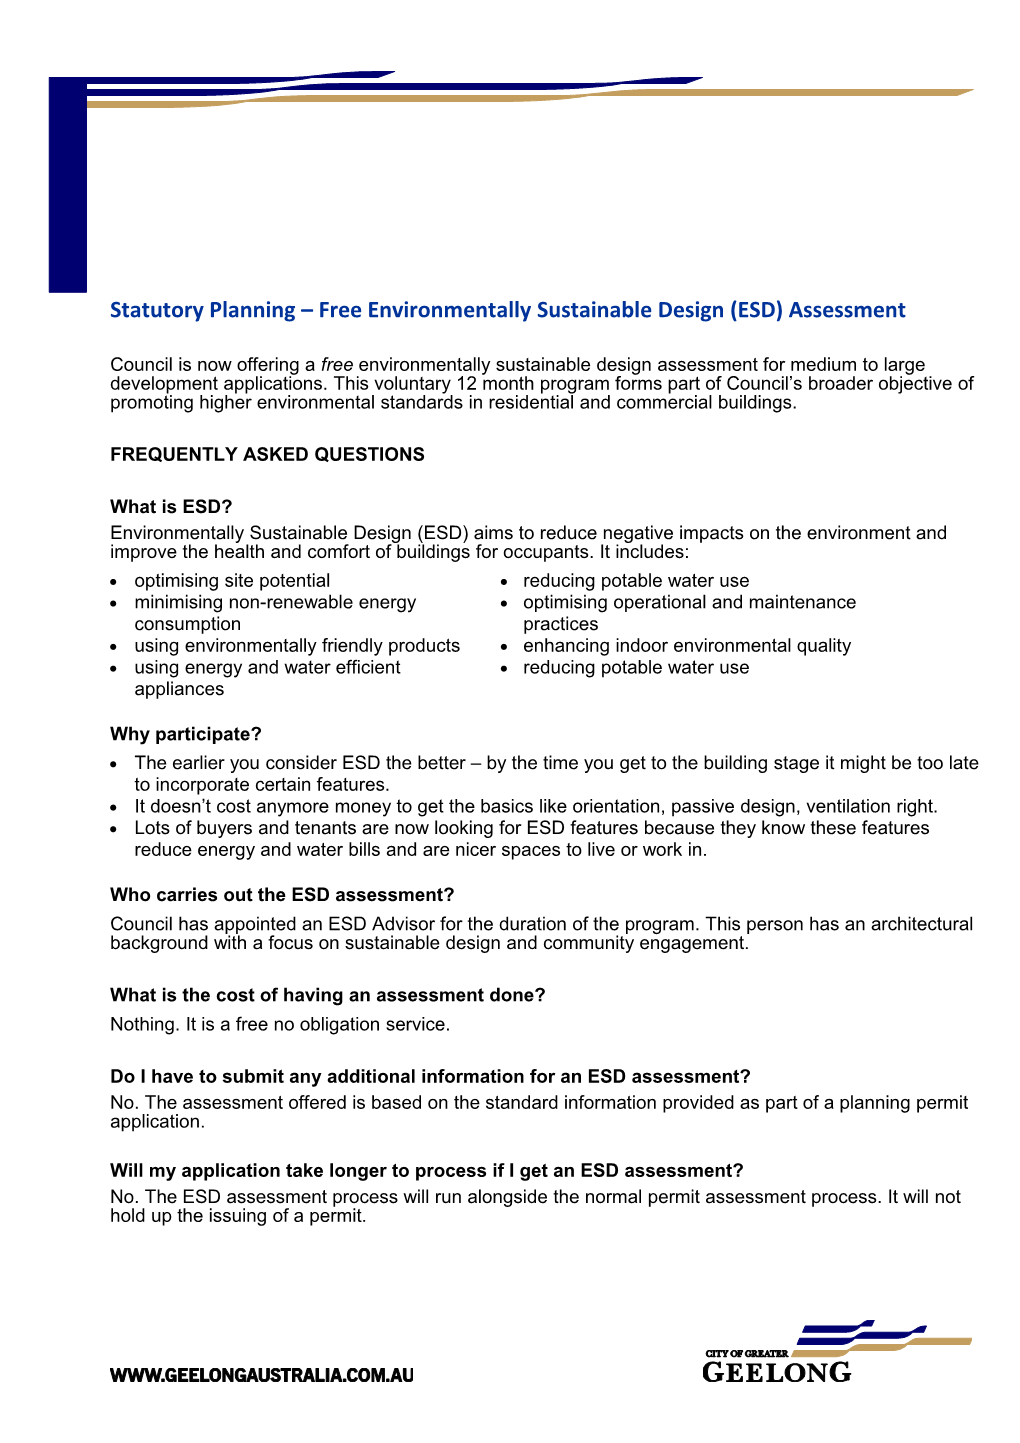 Statutory Planning Free Environmentally Sustainable Design (ESD) Assessment